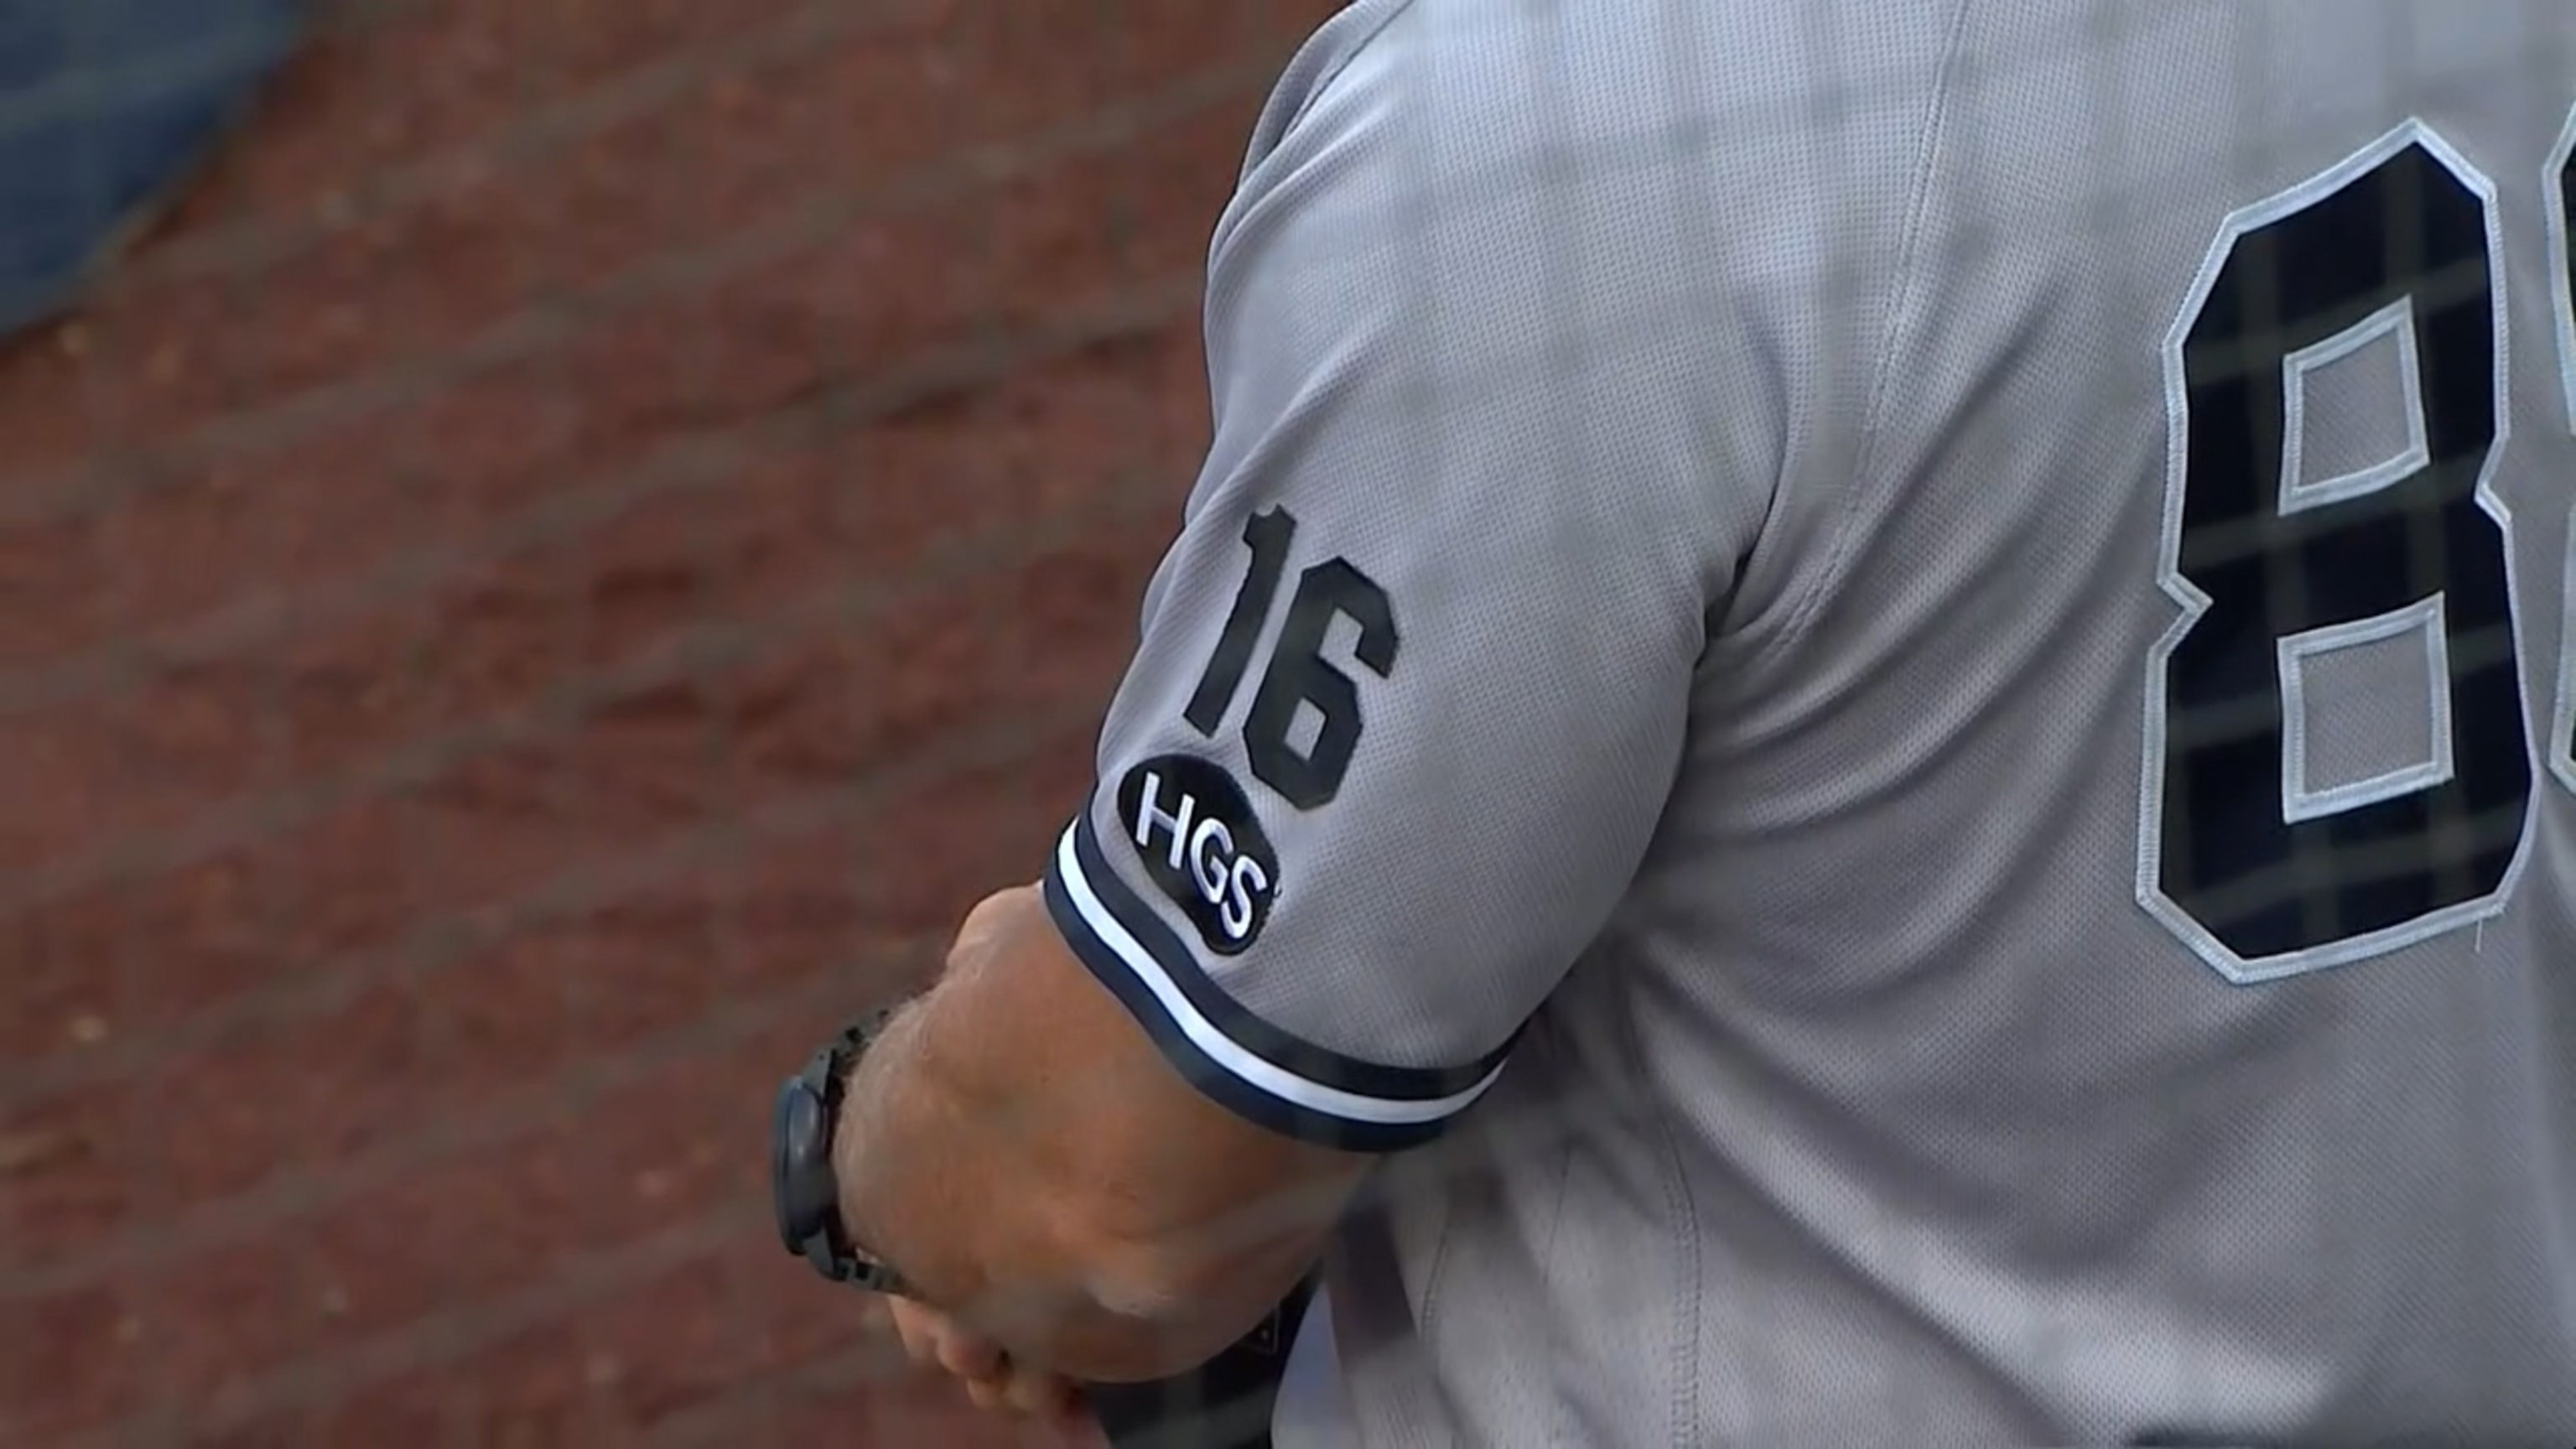 Yankees uniform patch to honor Hank Steinbrenner